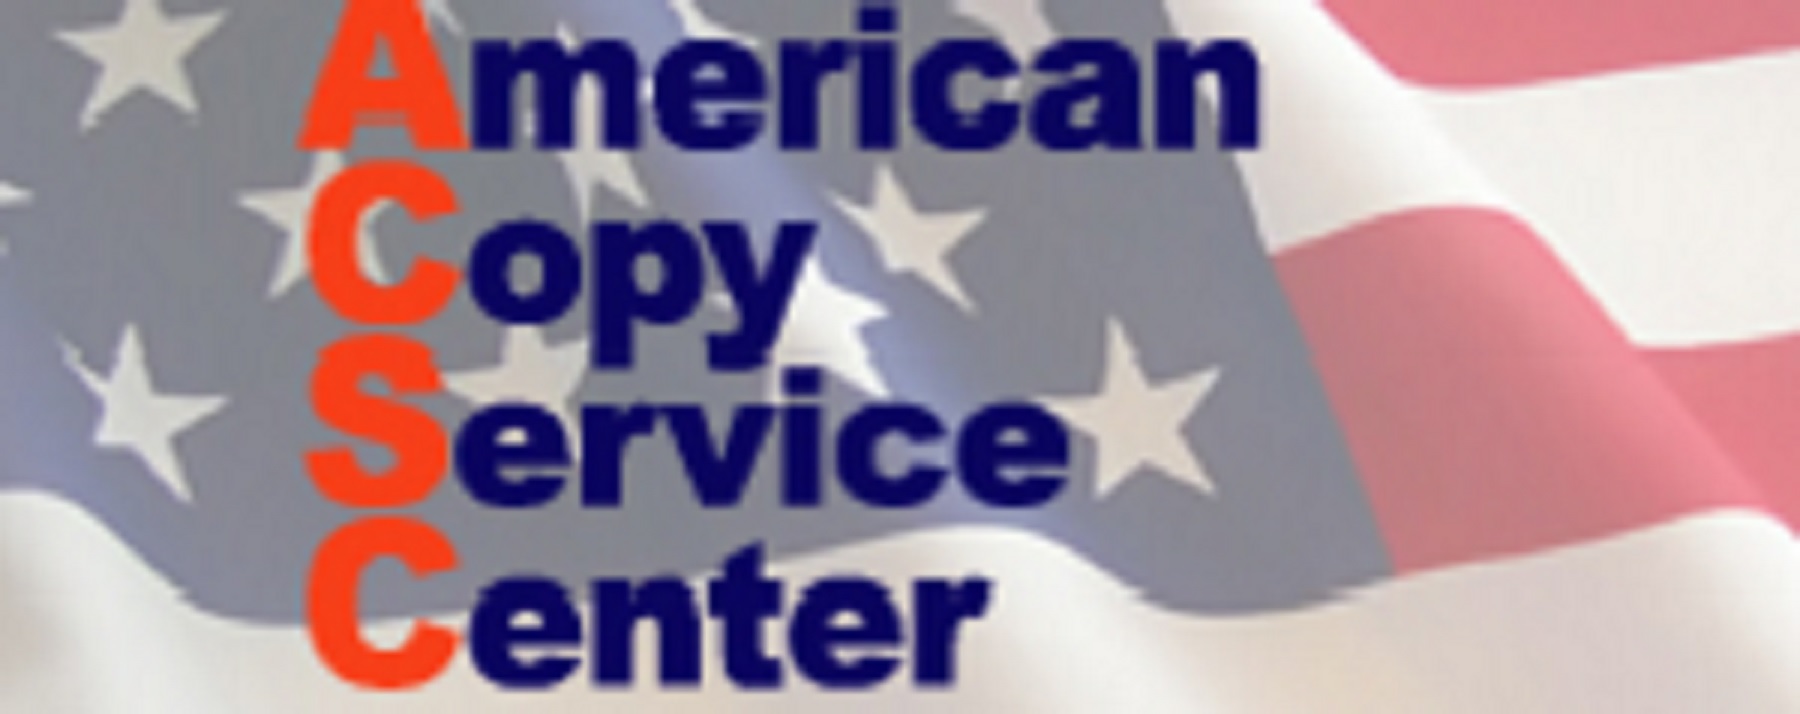 American Copy Service Center, Inc.